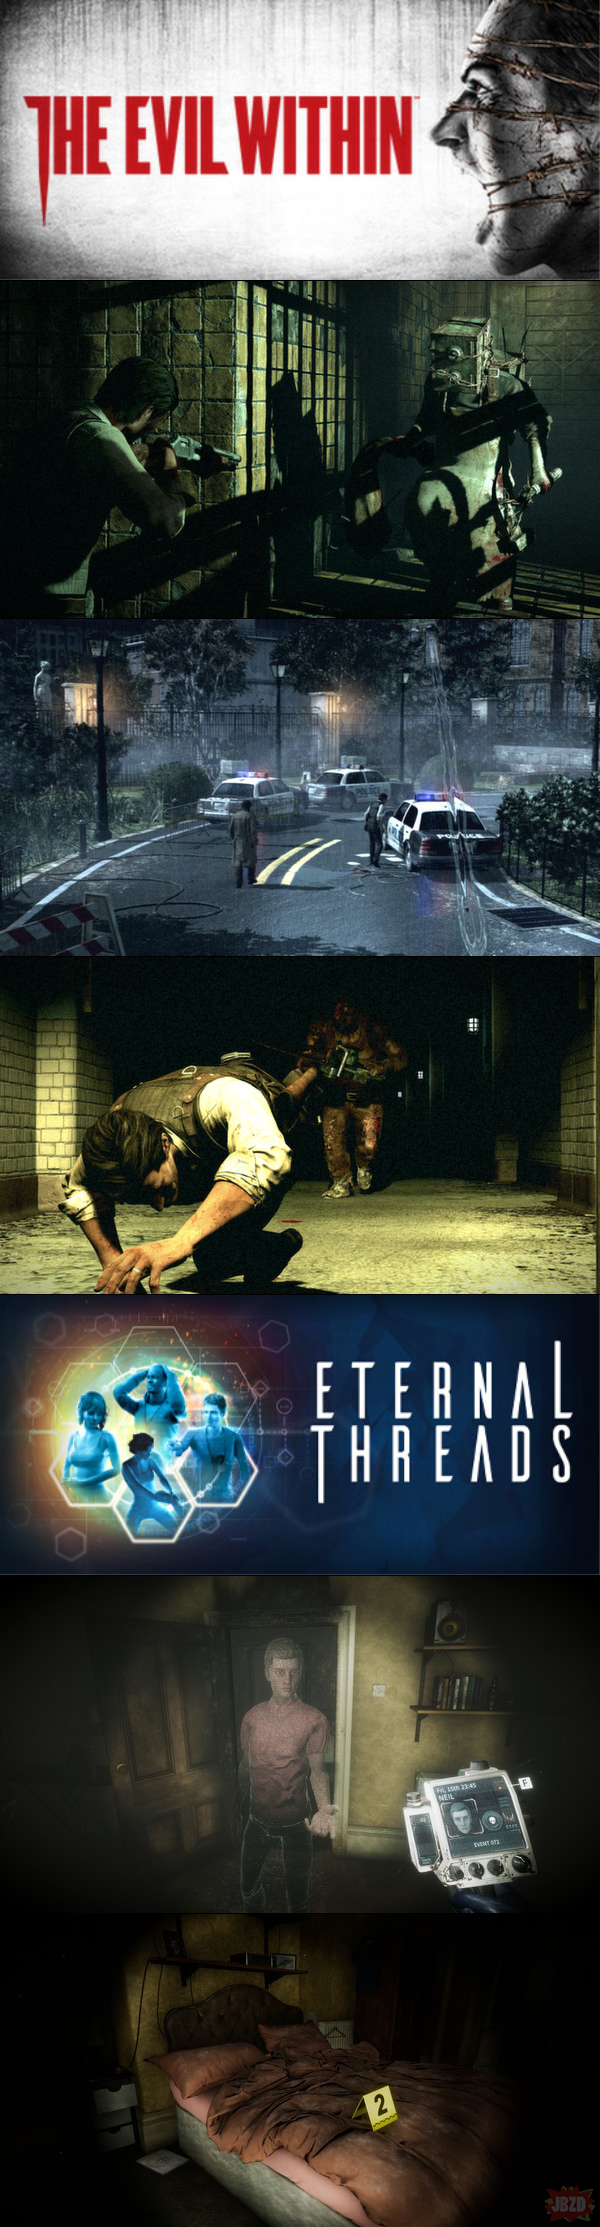 The Evil Within oraz Eternal Threads za darmo w Free Games Store